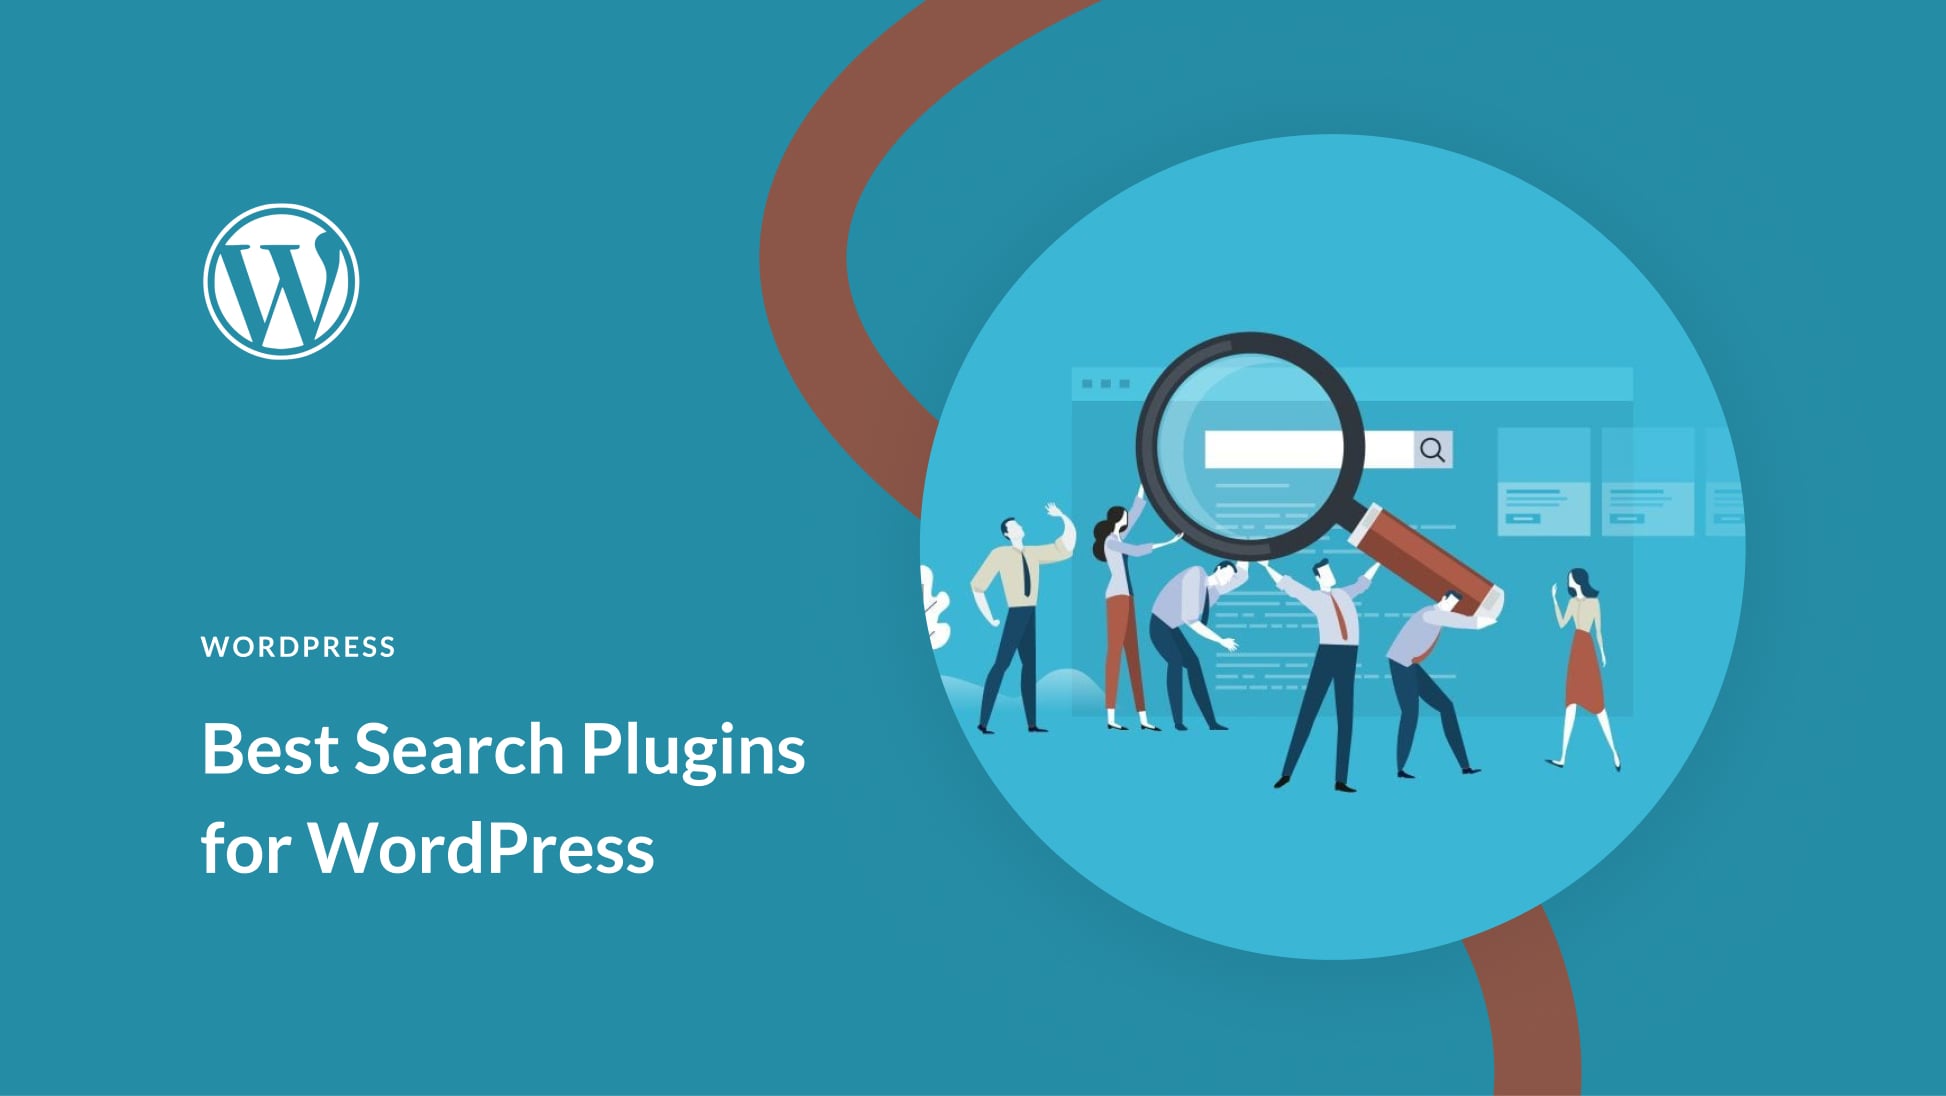 10 Best WordPress Search Plugins in 2023